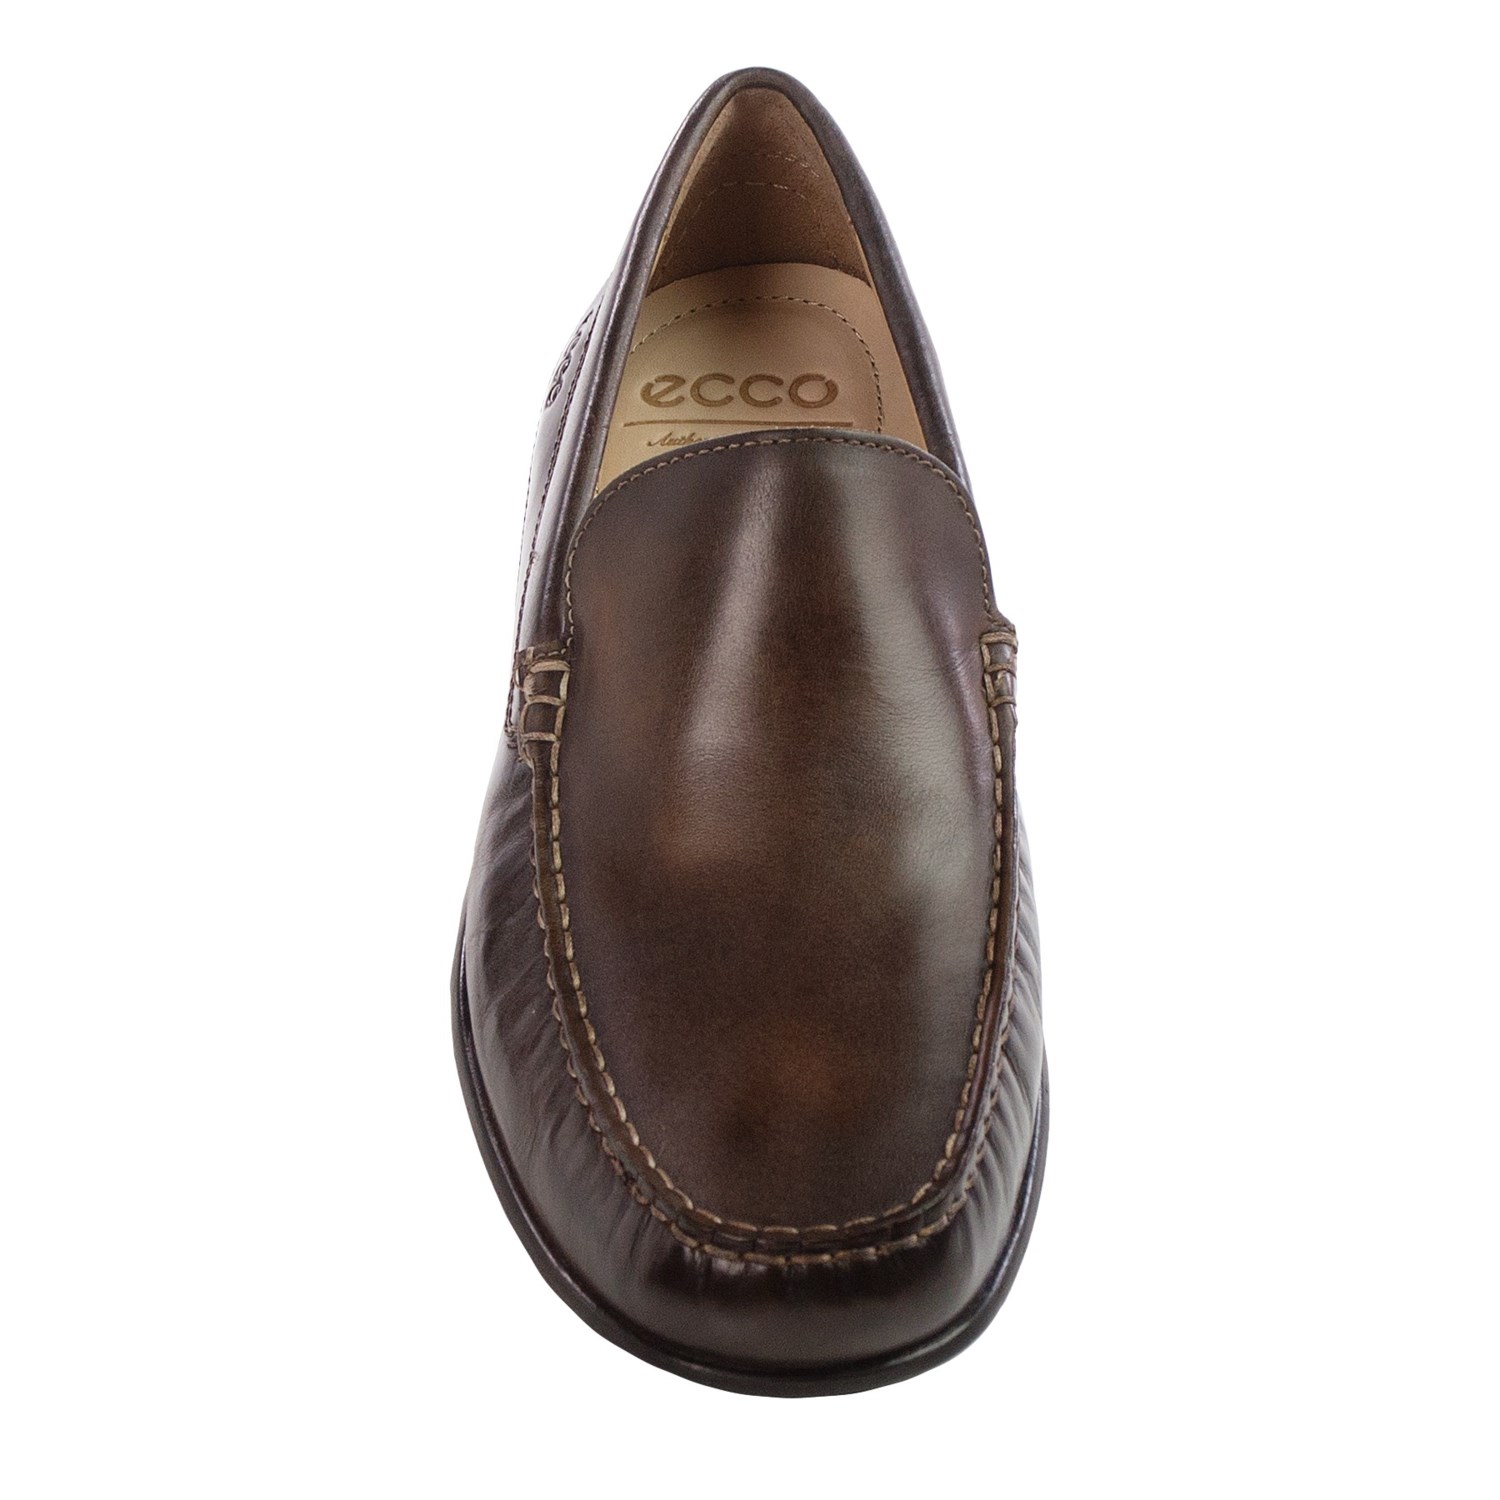 ECCO Classic Moc Shoes (For Men) - Save 46%